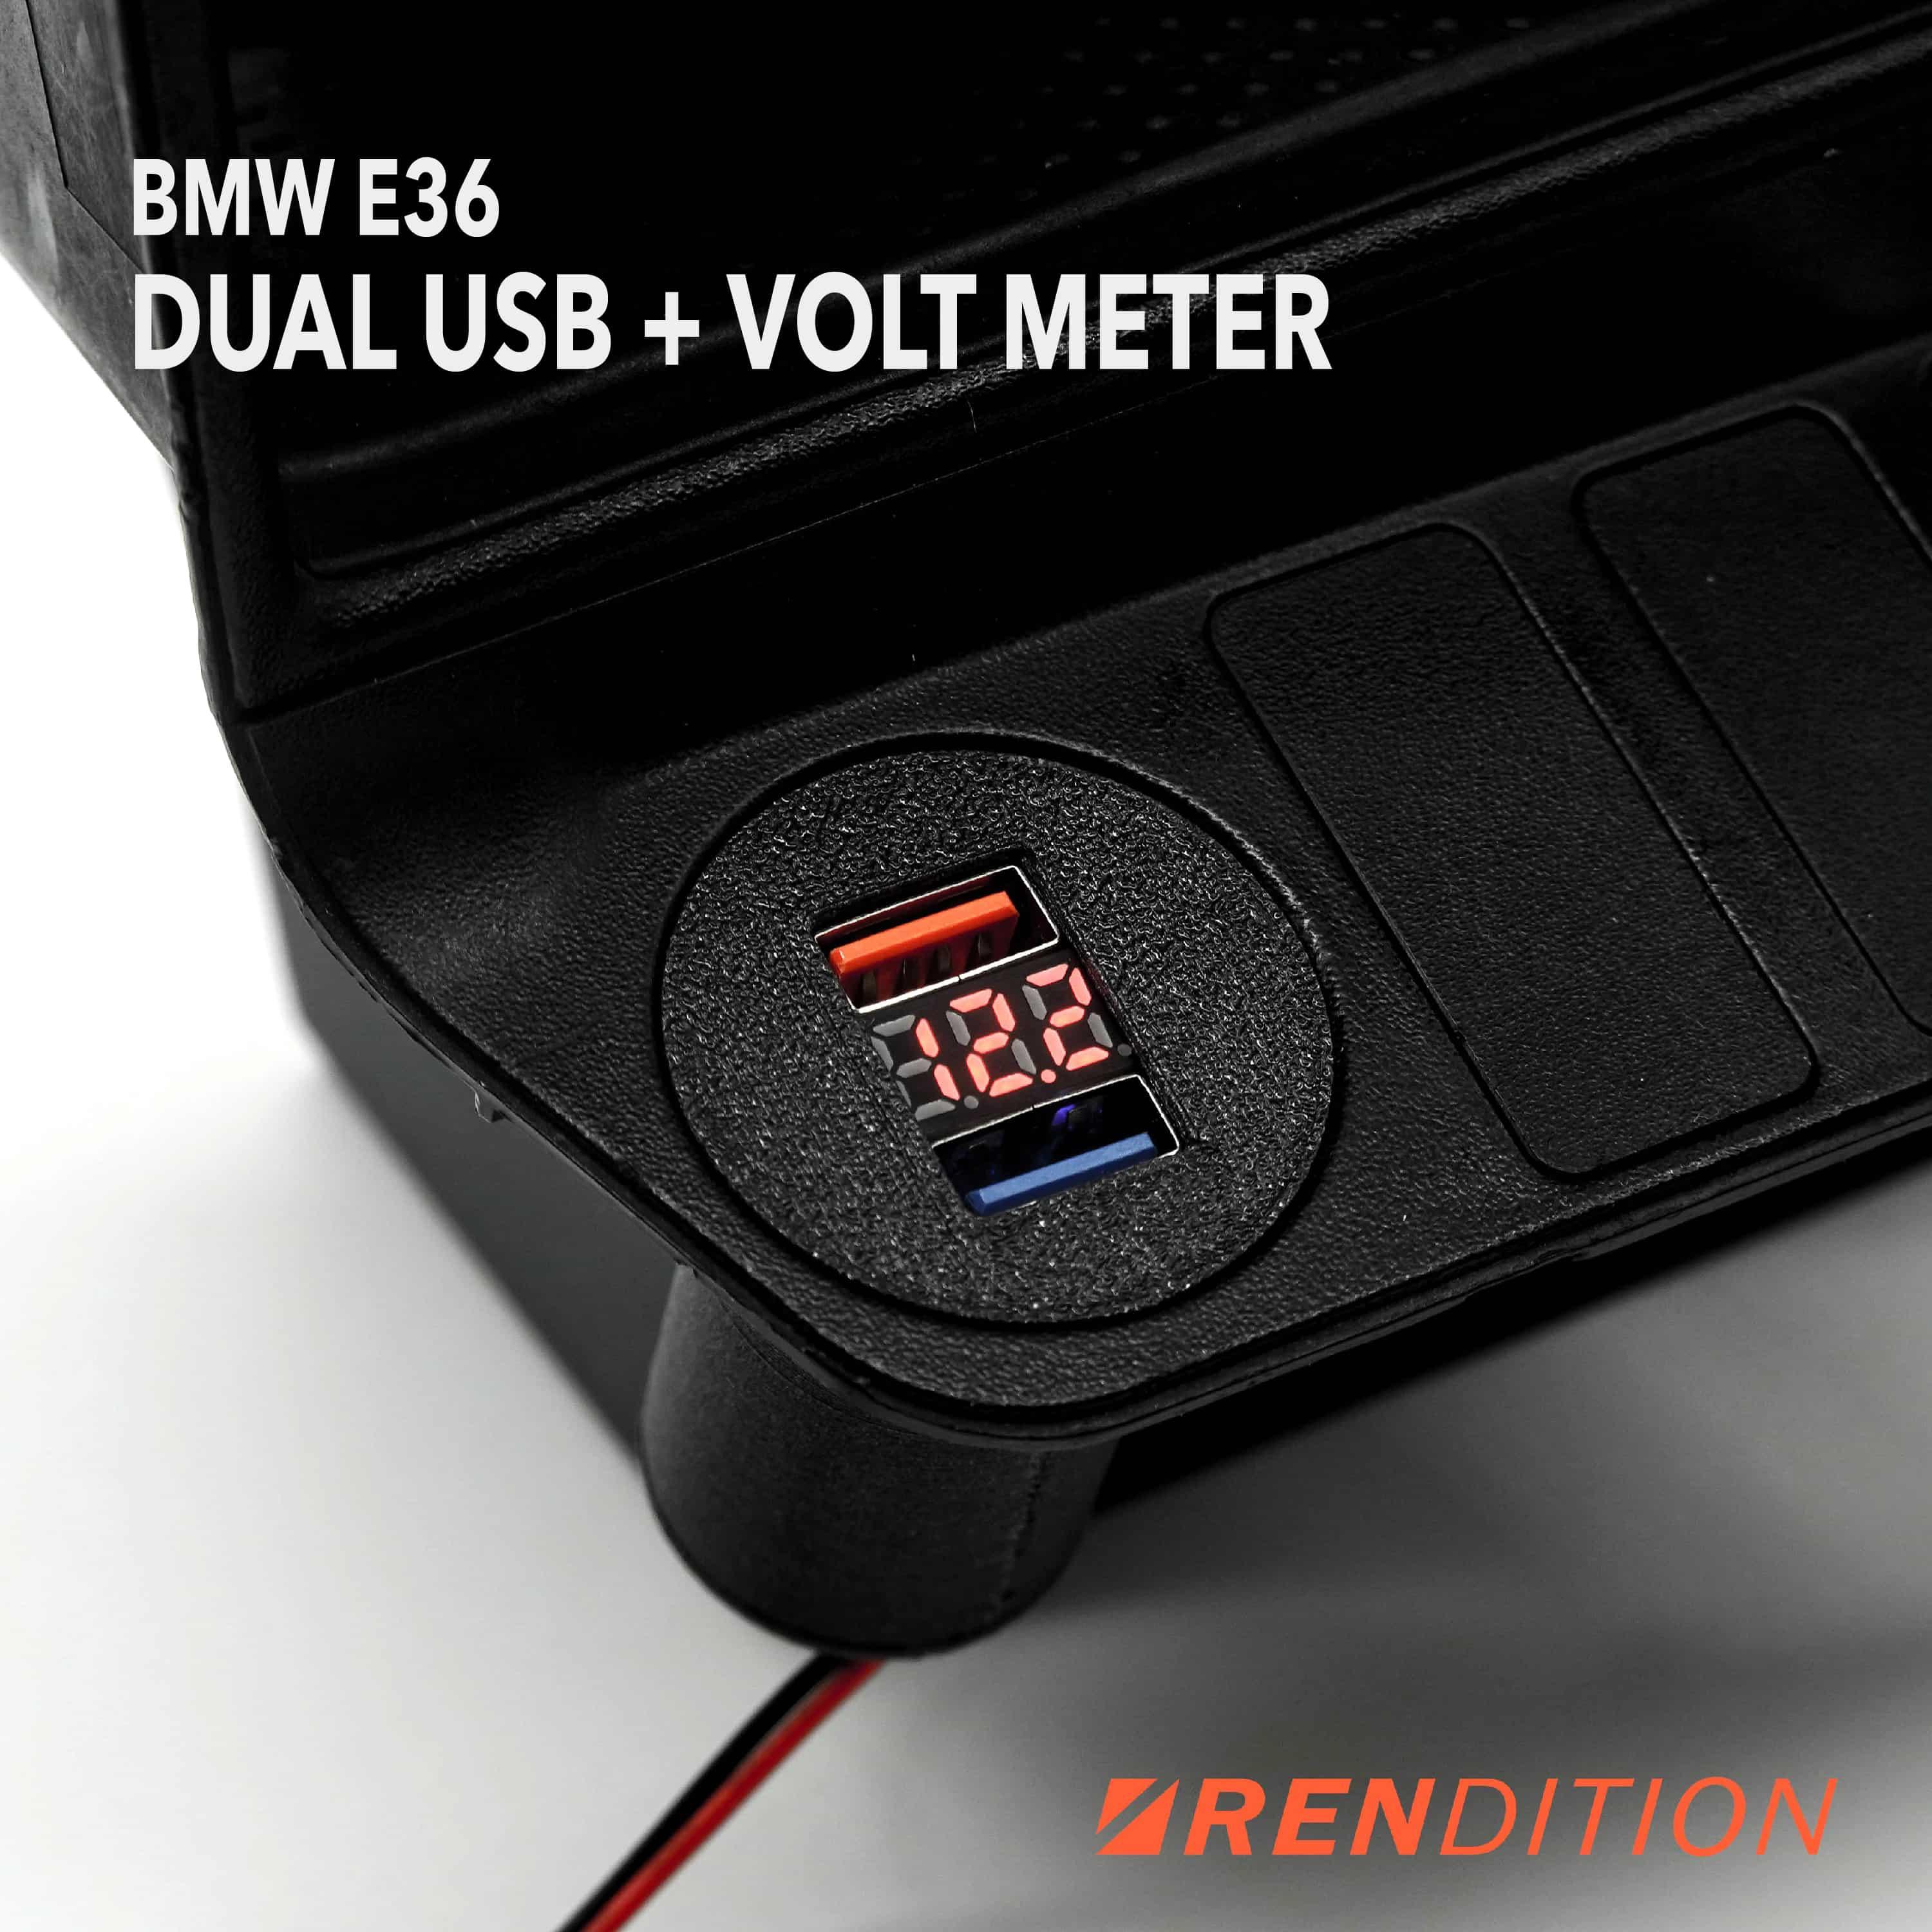 BMW E36 DUAL USB + VOLT METER CIGARETTE LIGHTER REPLACEMENT - K2 Industries